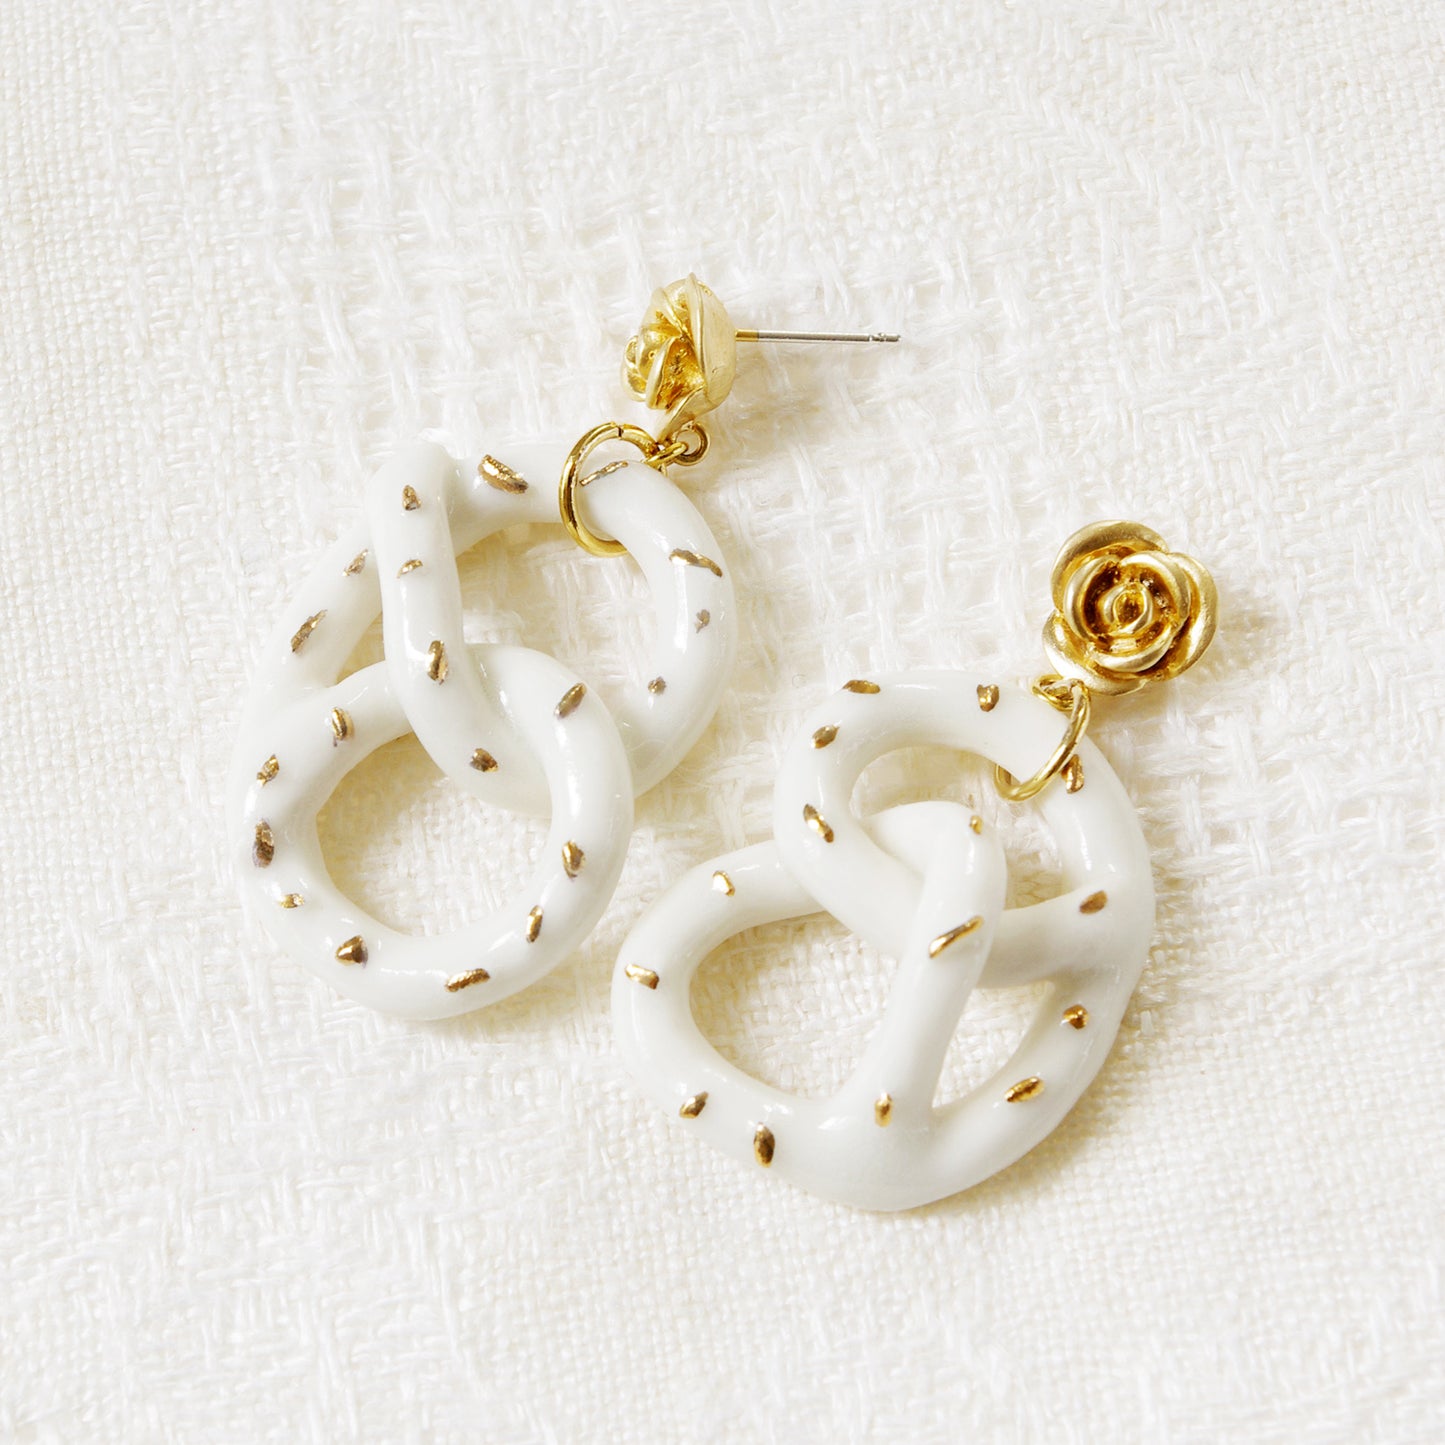 Golden Rose And Salted Porcelain Pretzel Earrings